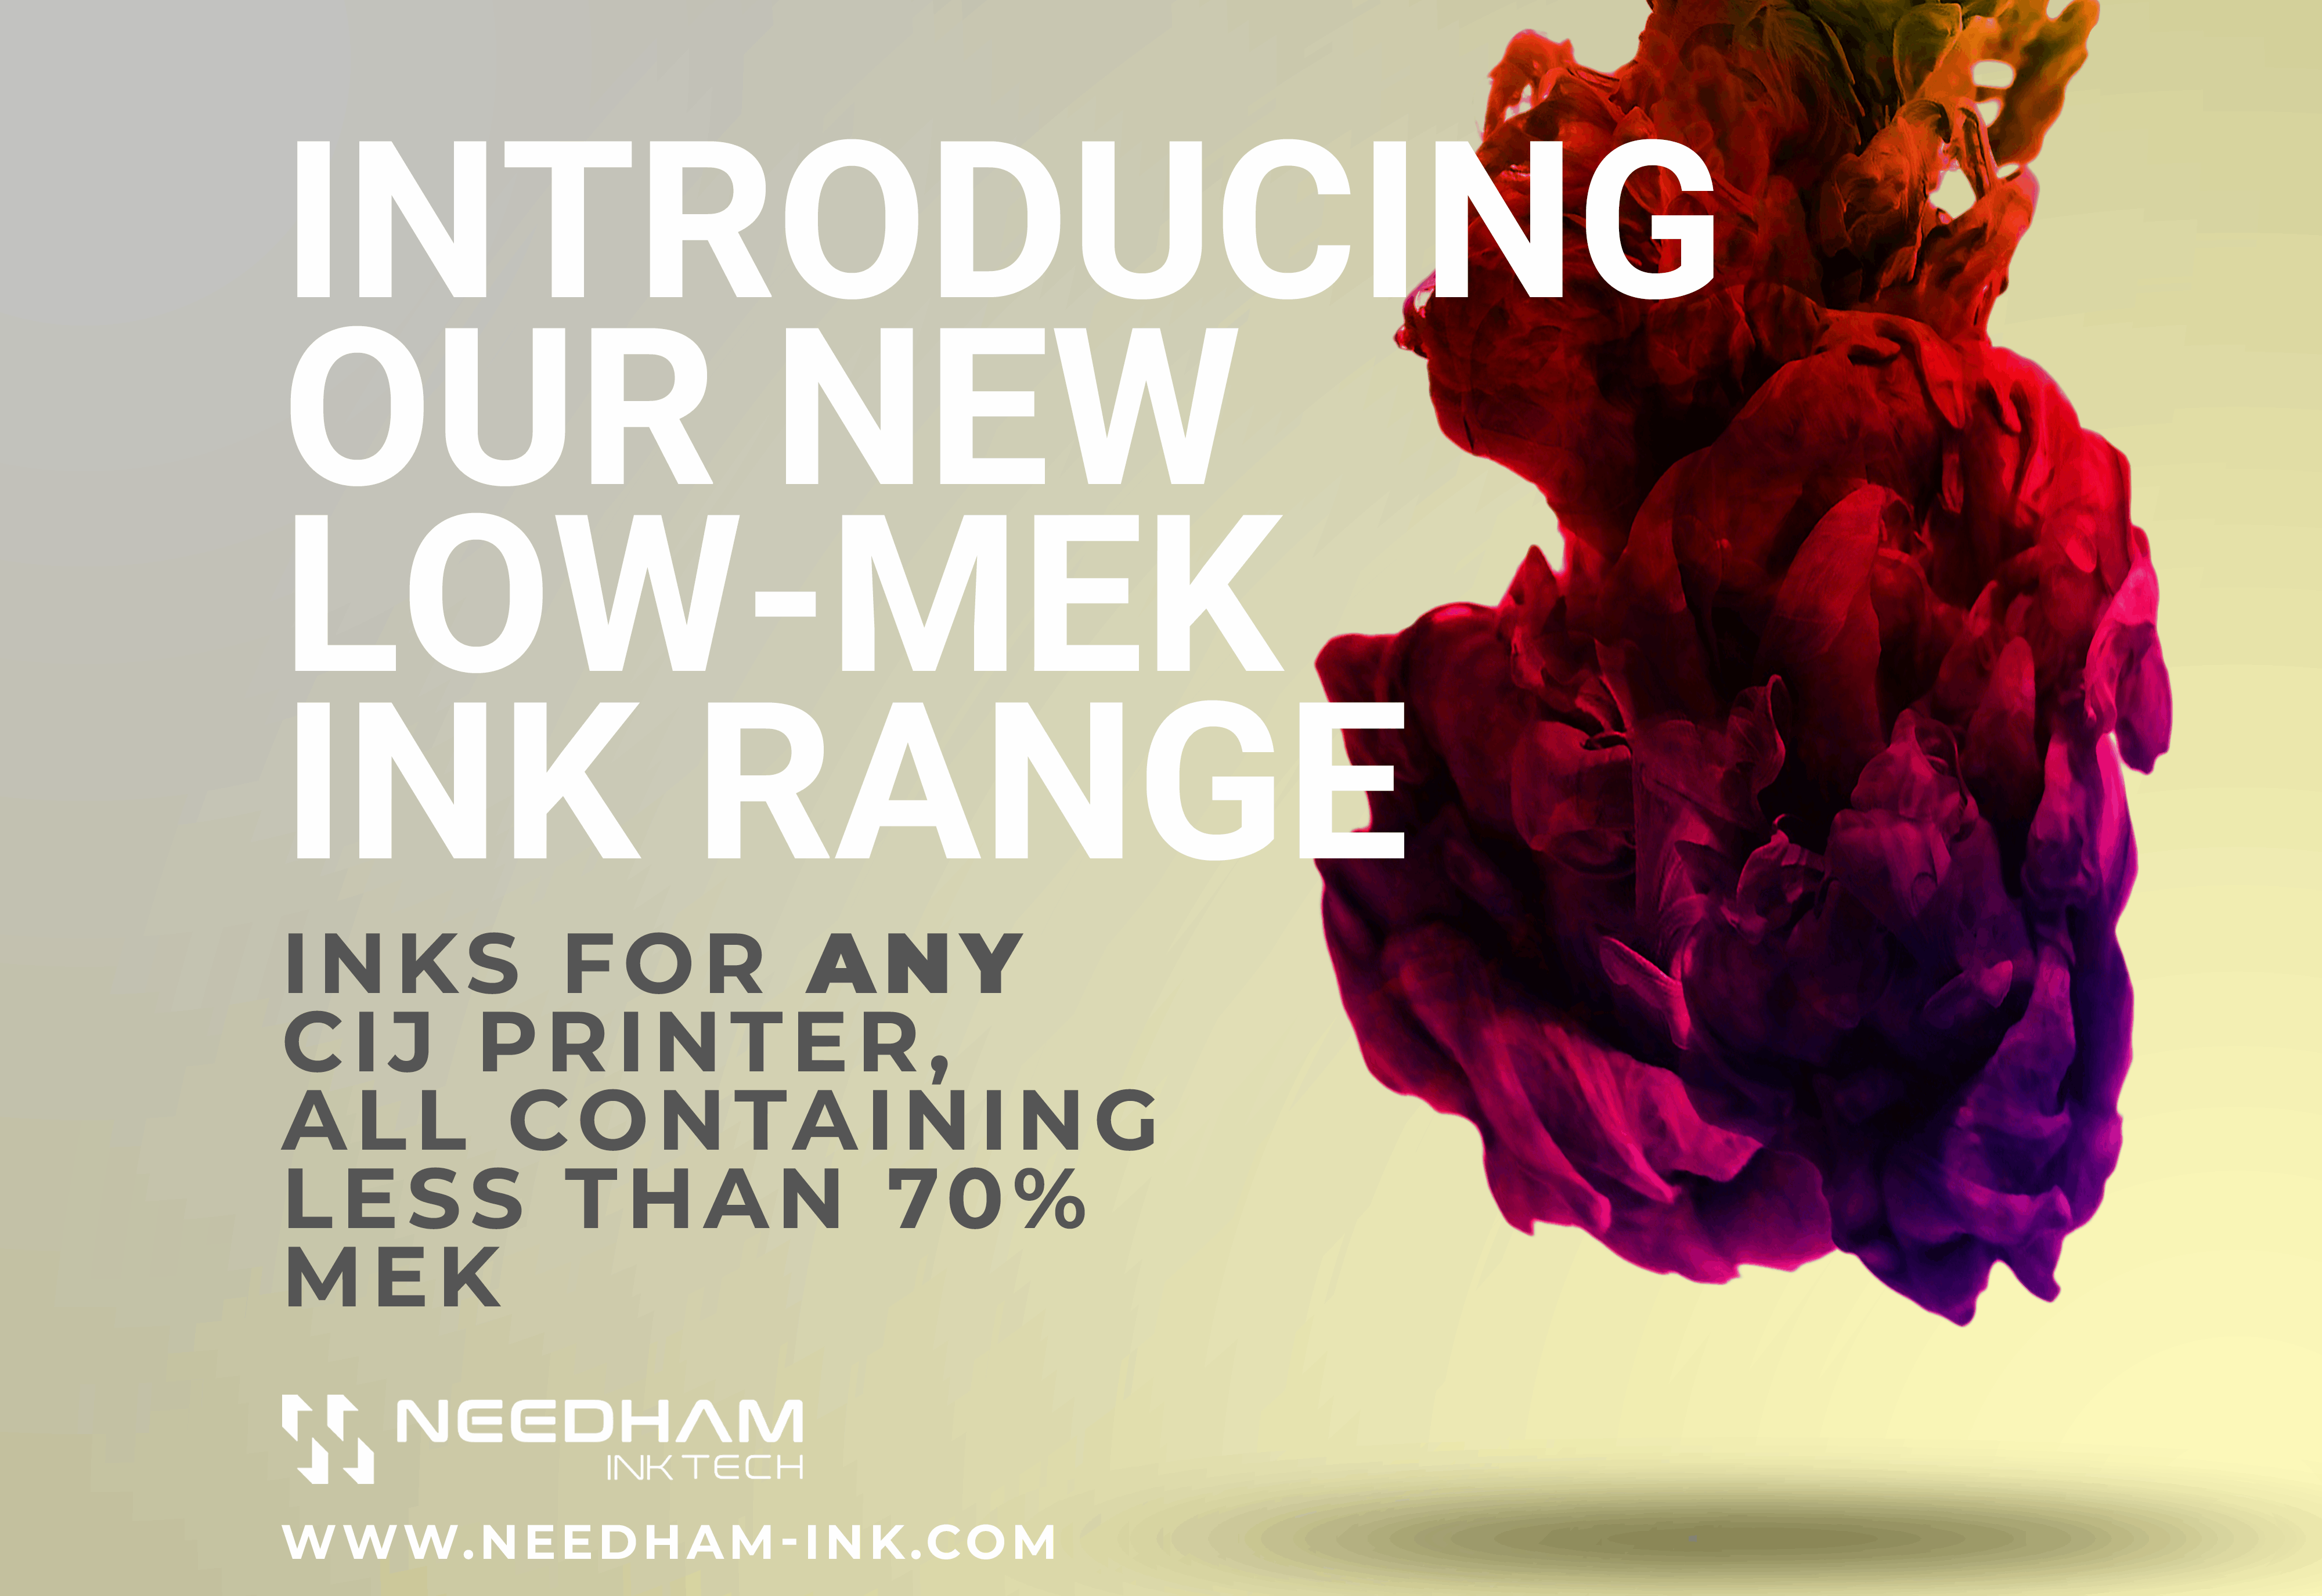 Needham Inks Introduces Low-MEK CIJ Inks and solvent range